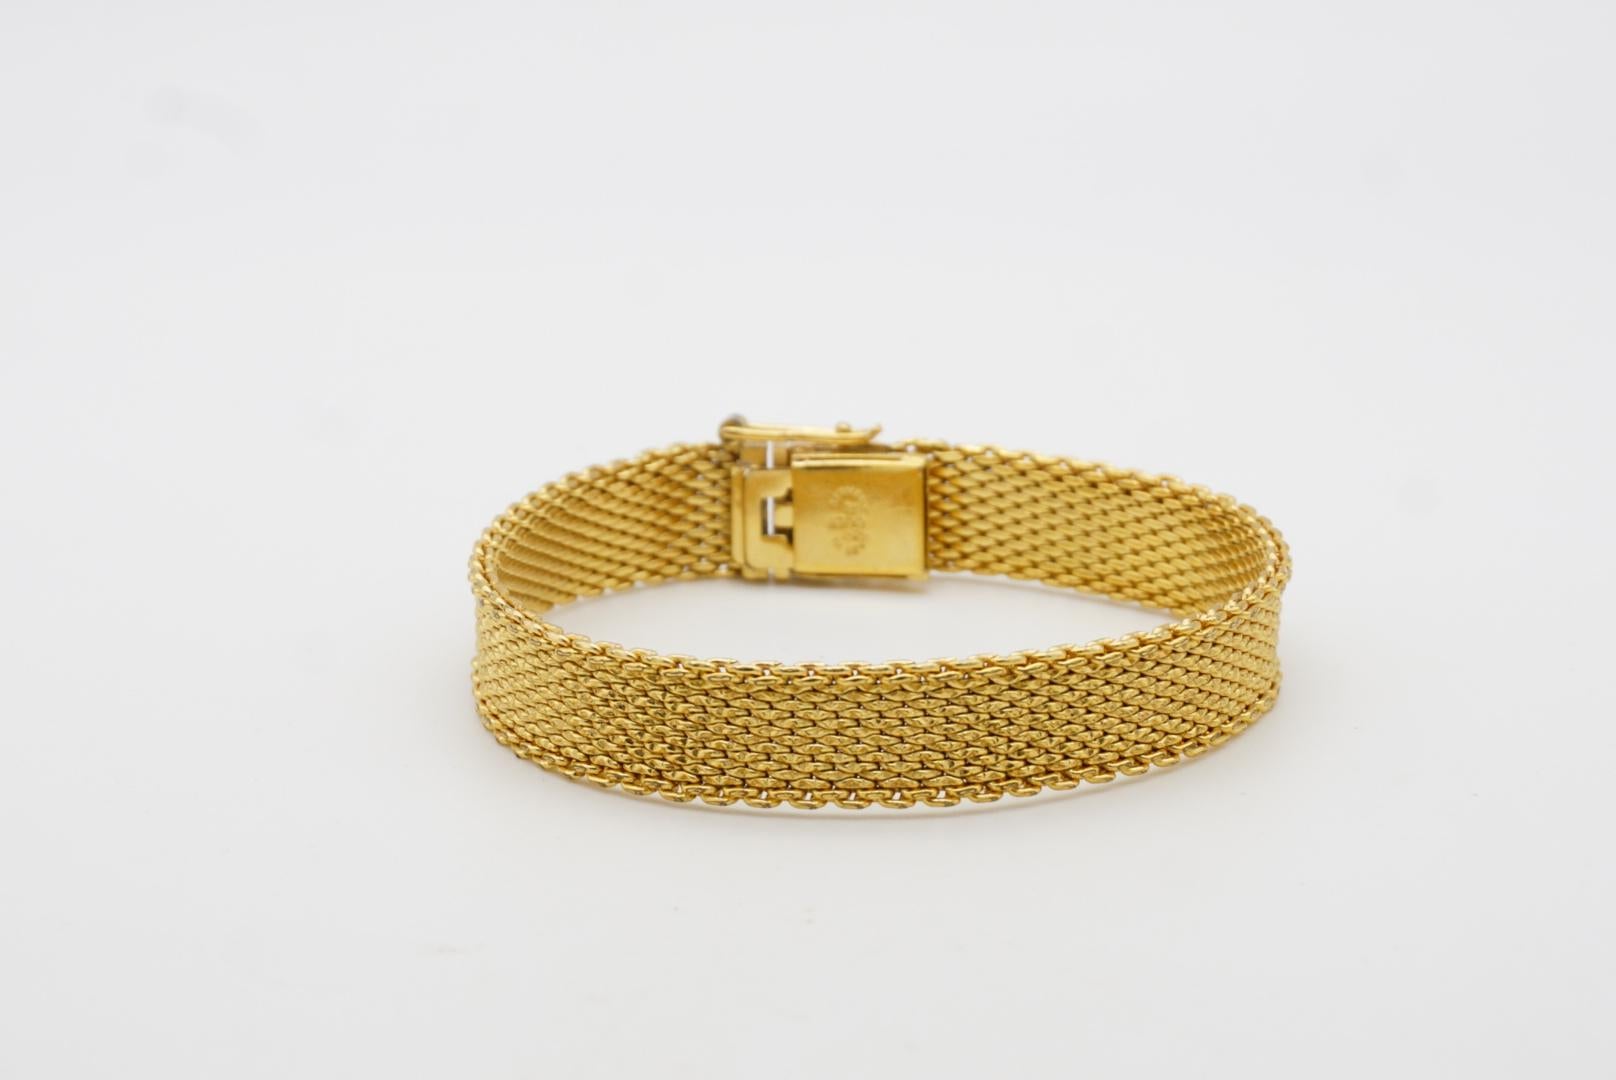 Christian Dior GROSSE 1962 Ridged Weave Link Mesh Modernist Gold Cuff Bracelet For Sale 2